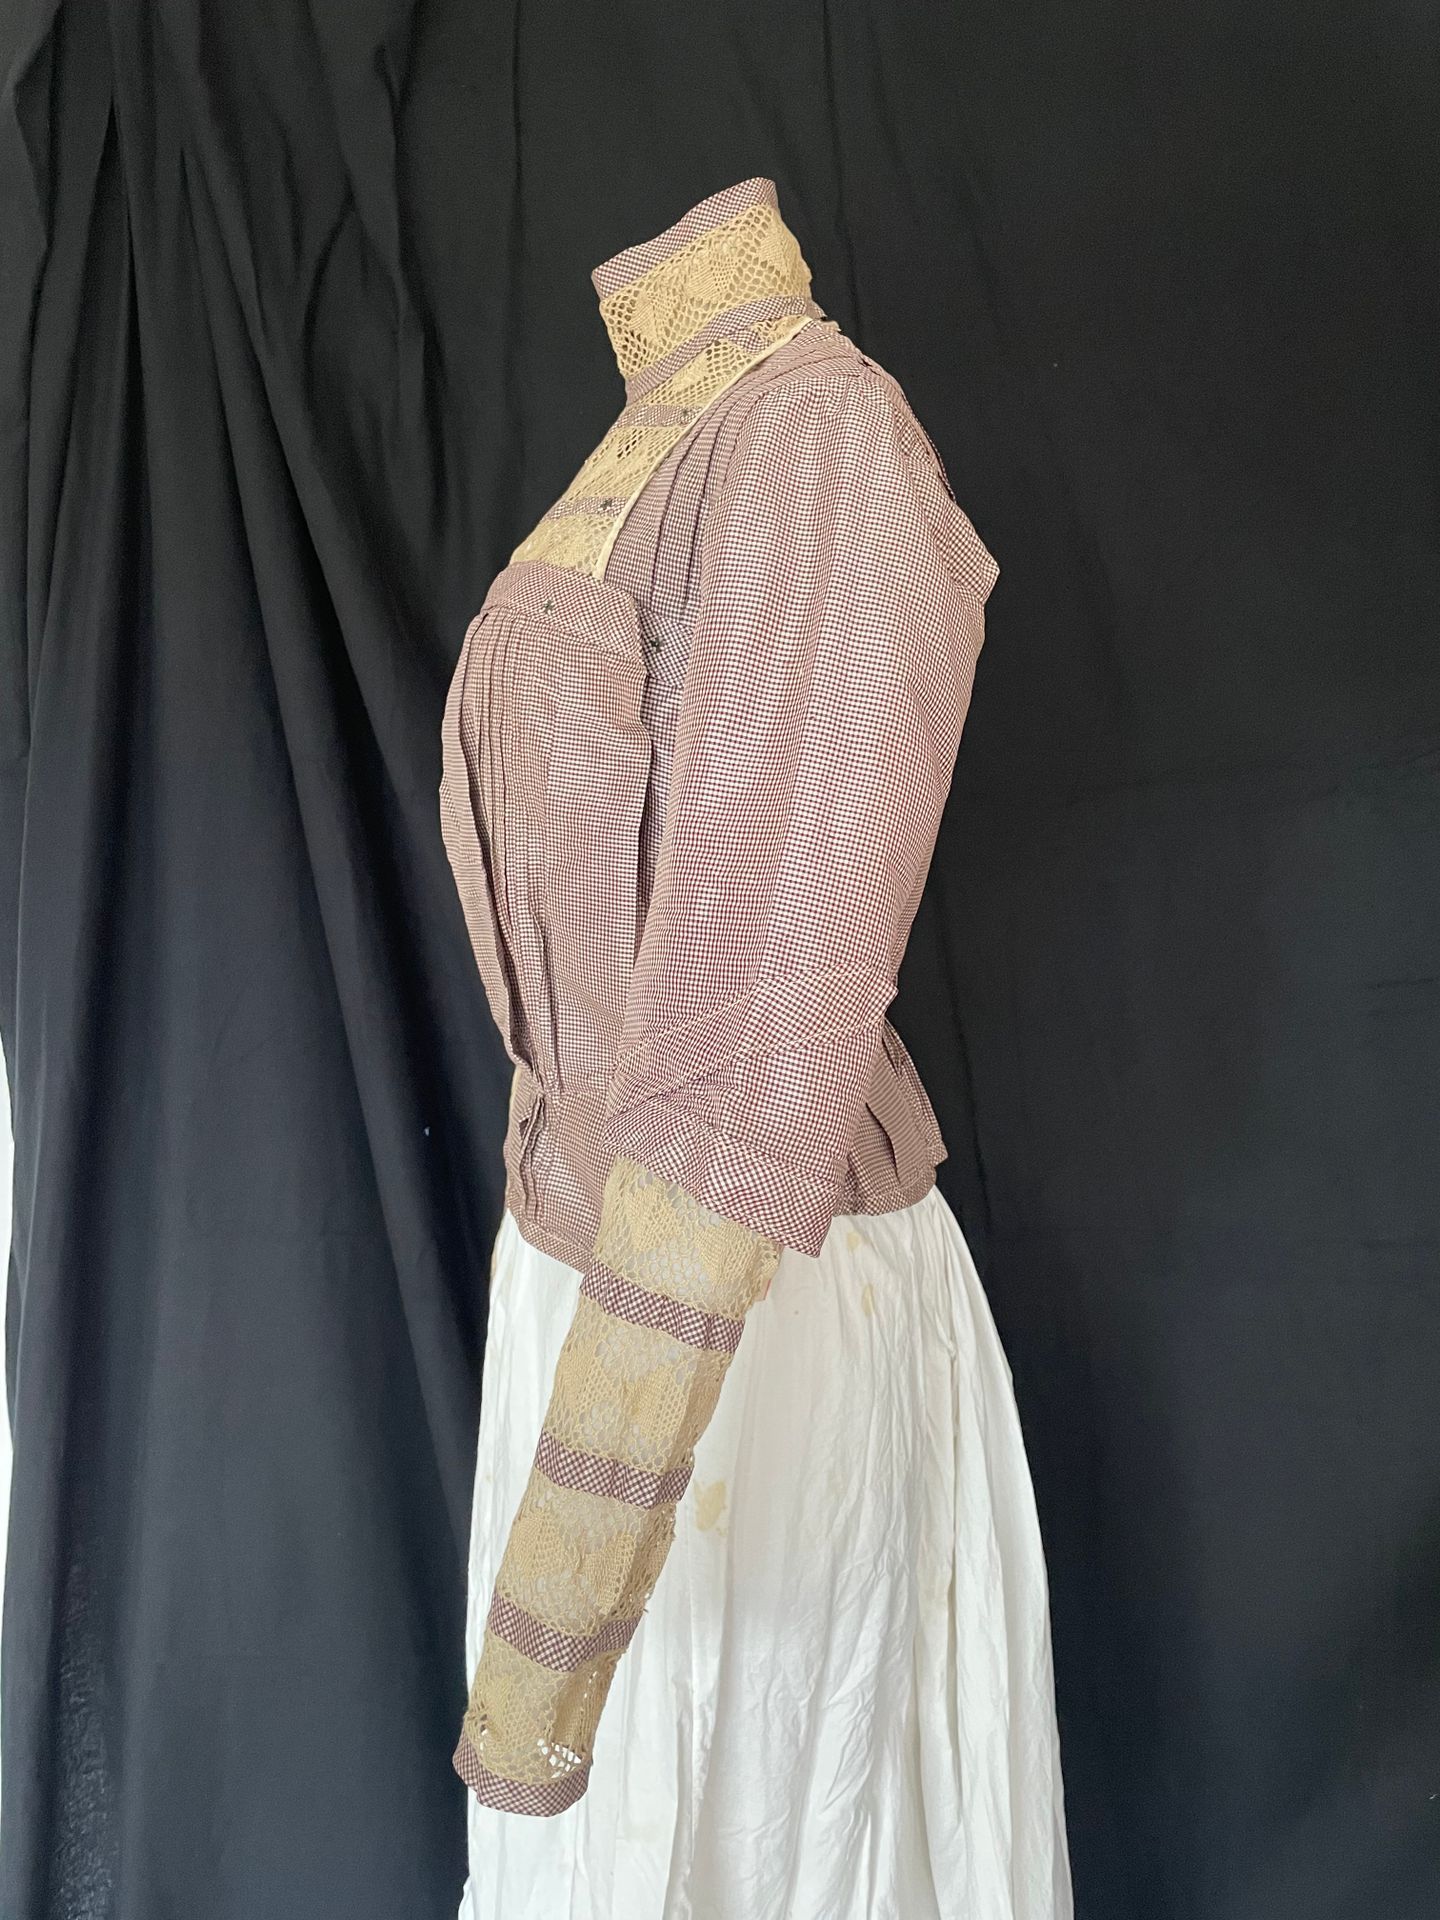 Null Dress bodice, travel outfit, circa 1900.
In plum squared taffeta and hemp l&hellip;